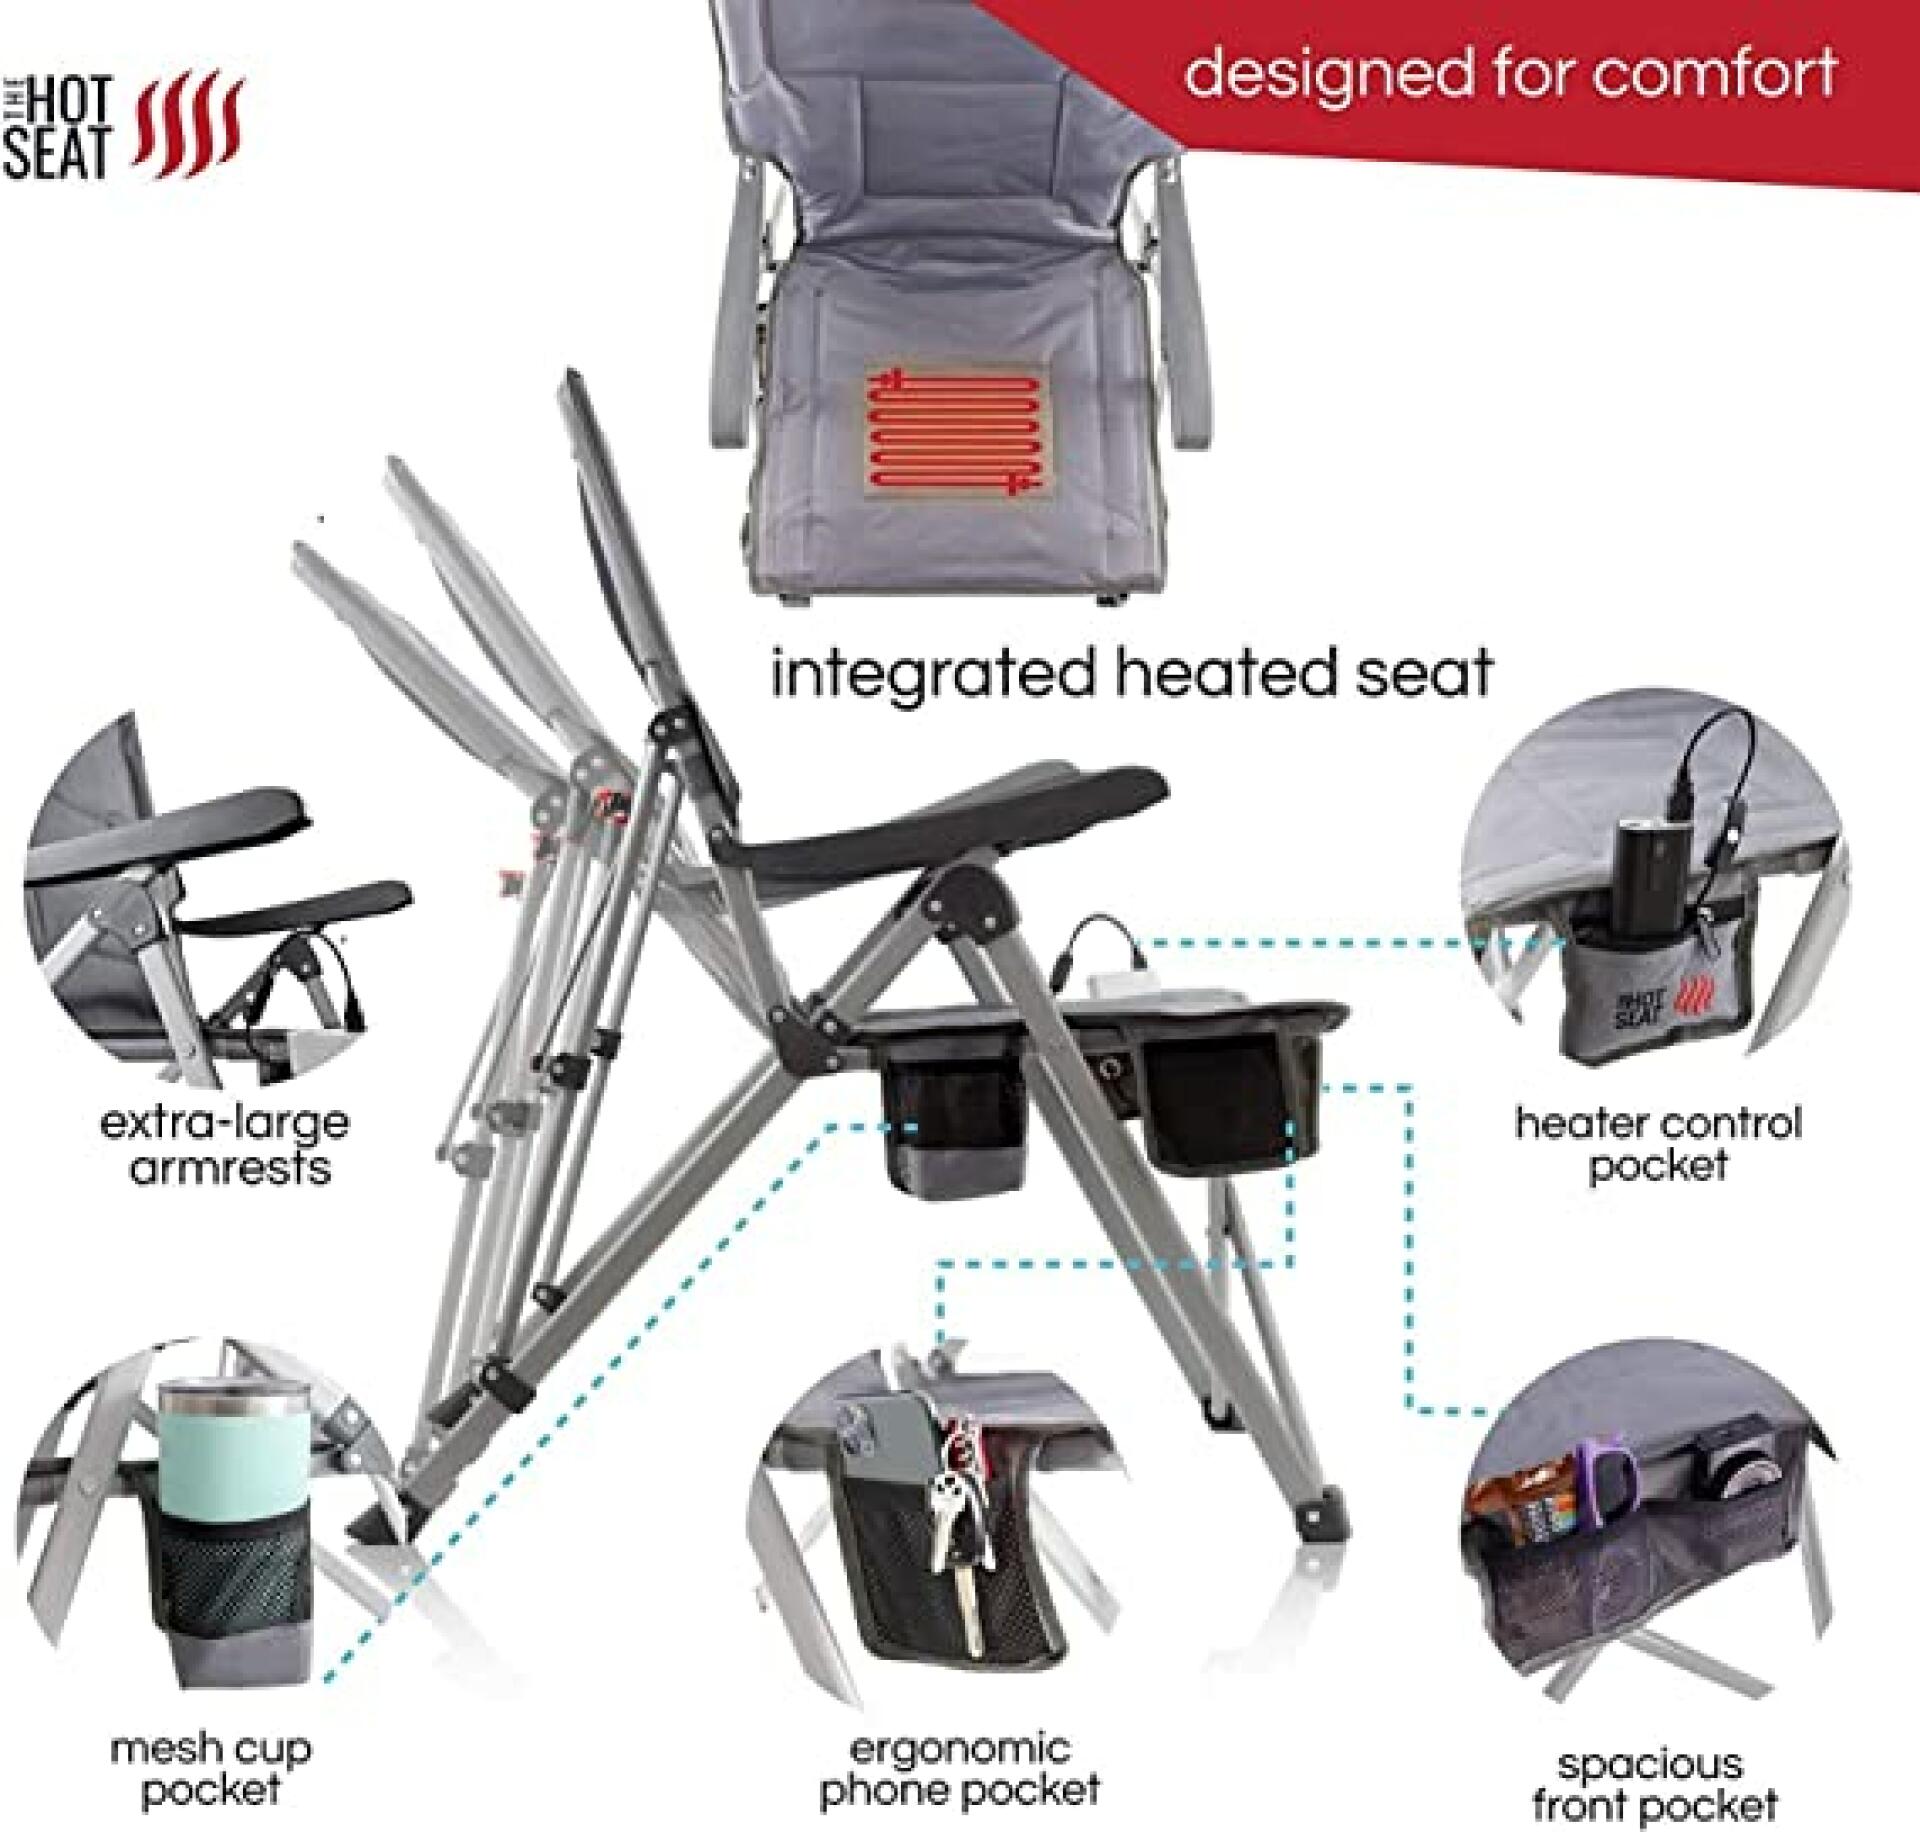 Hot seat verwarmde draagbare stoel xzMZBrcs